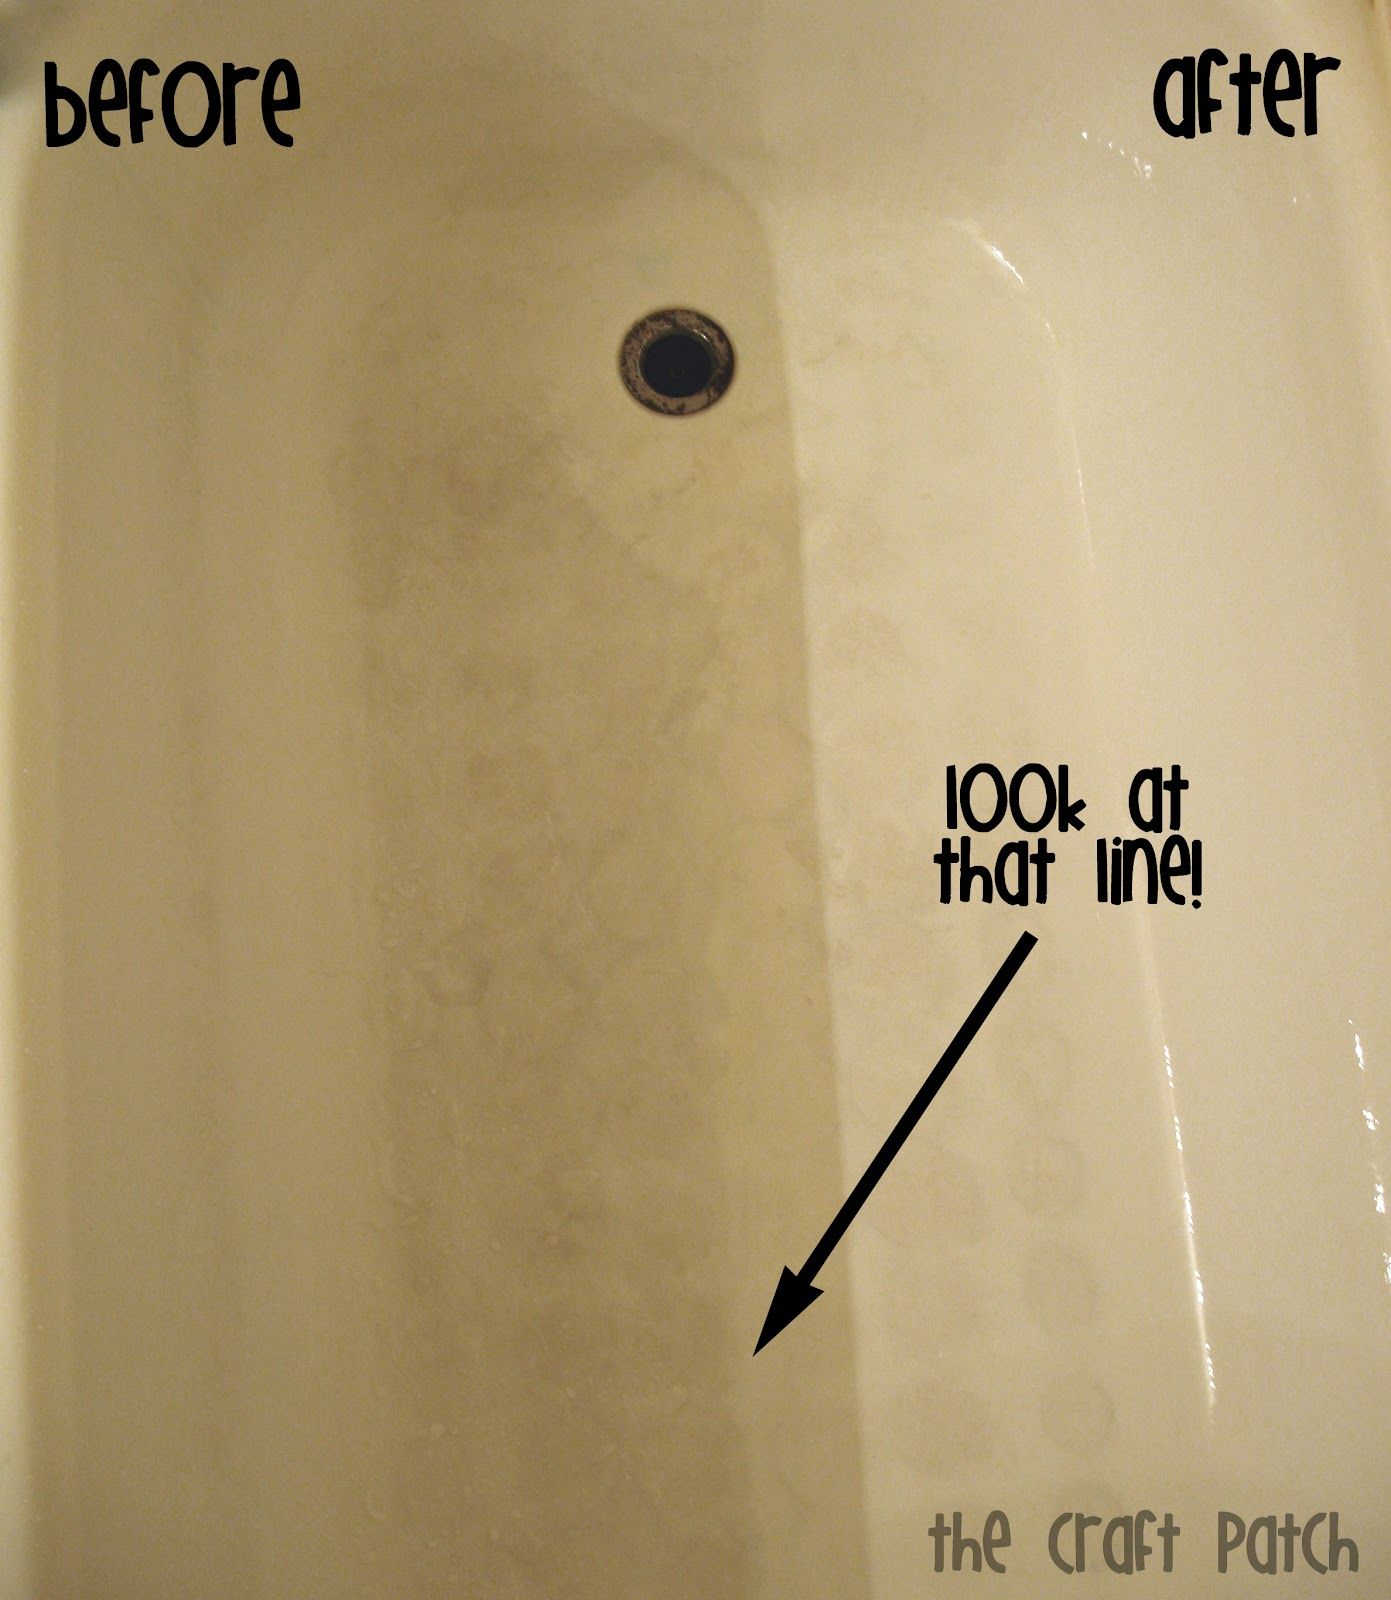 Tub Cleaner – vinegar and dish soap, no scrubbing! Heat 1/2C white vinegar in m&